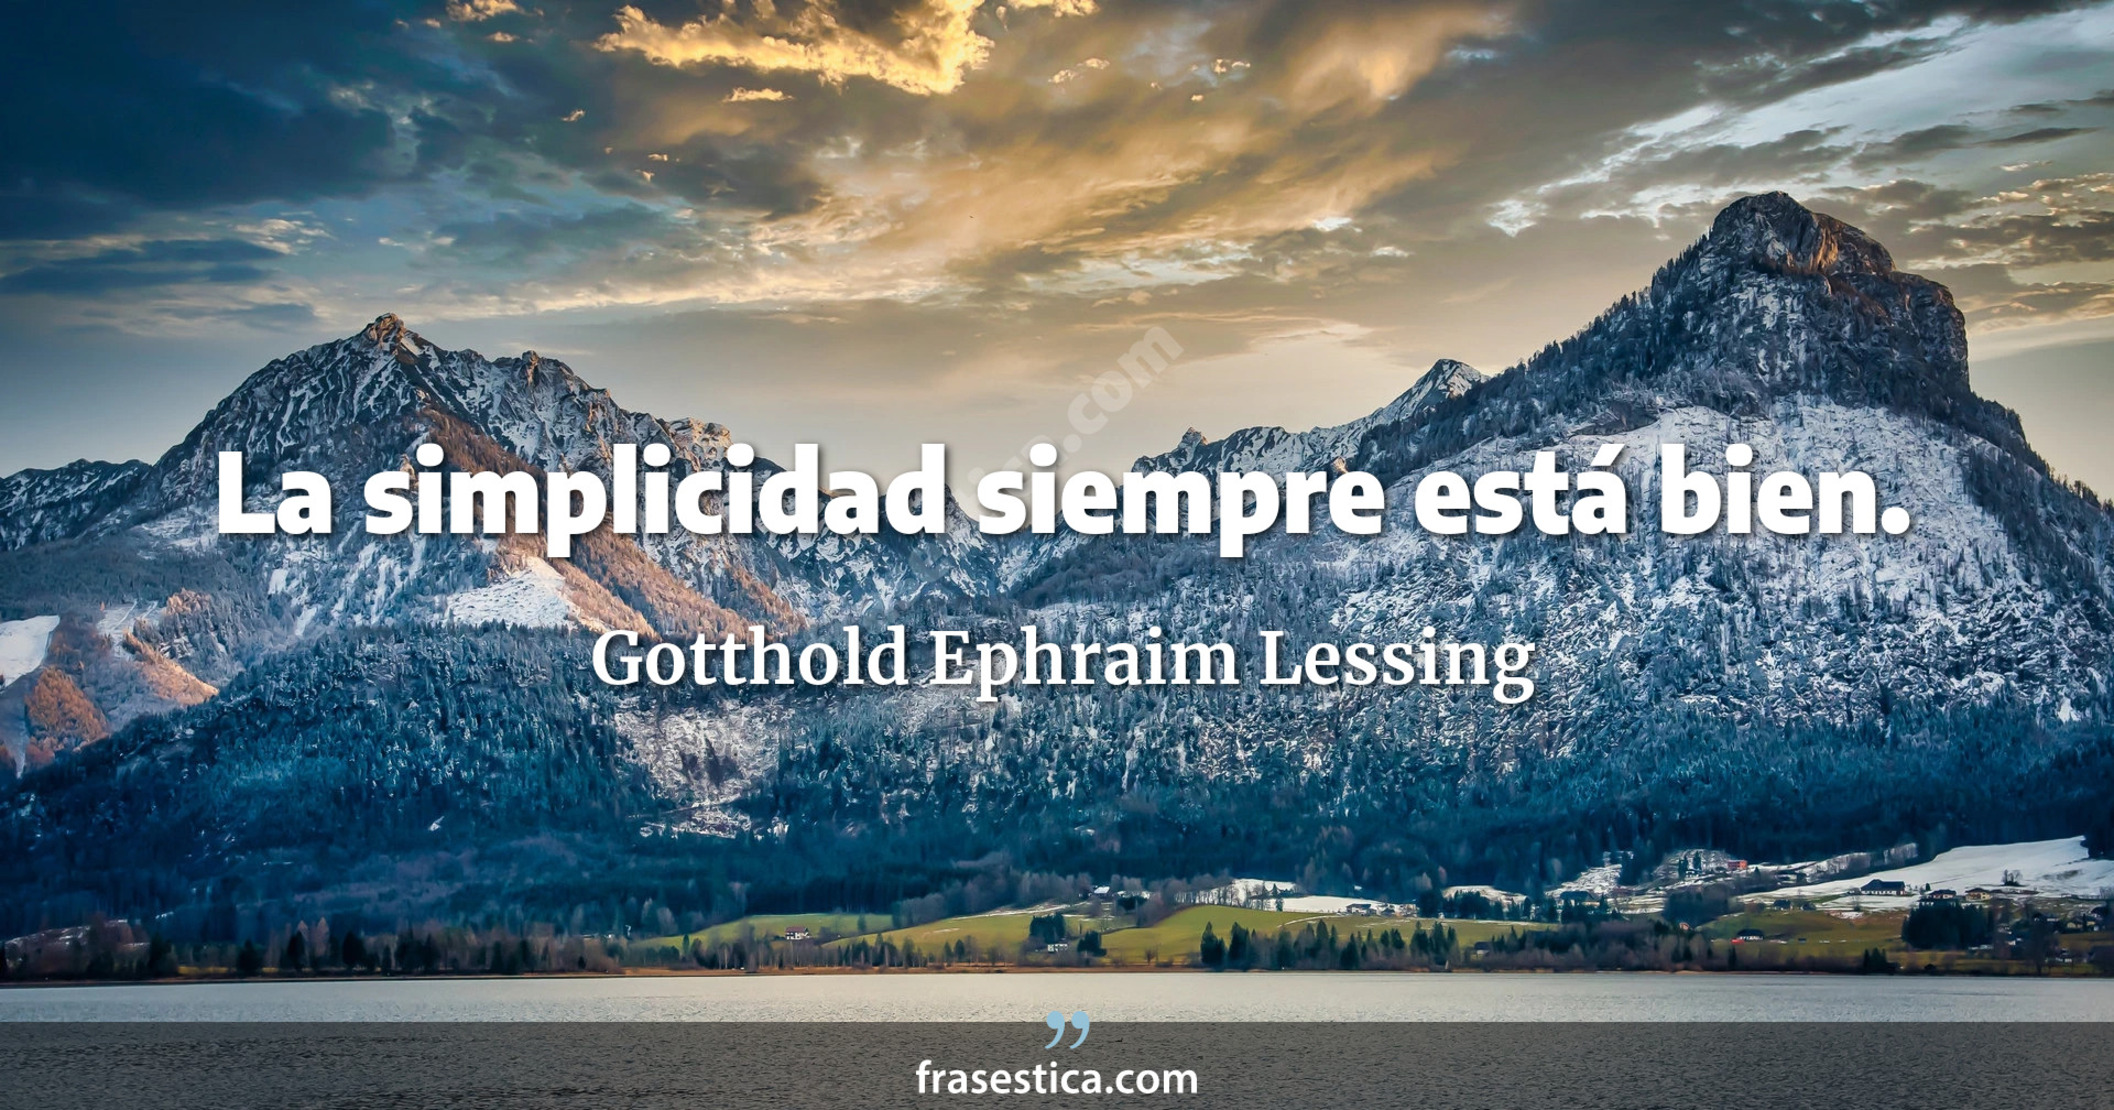 La simplicidad siempre está bien. - Gotthold Ephraim Lessing